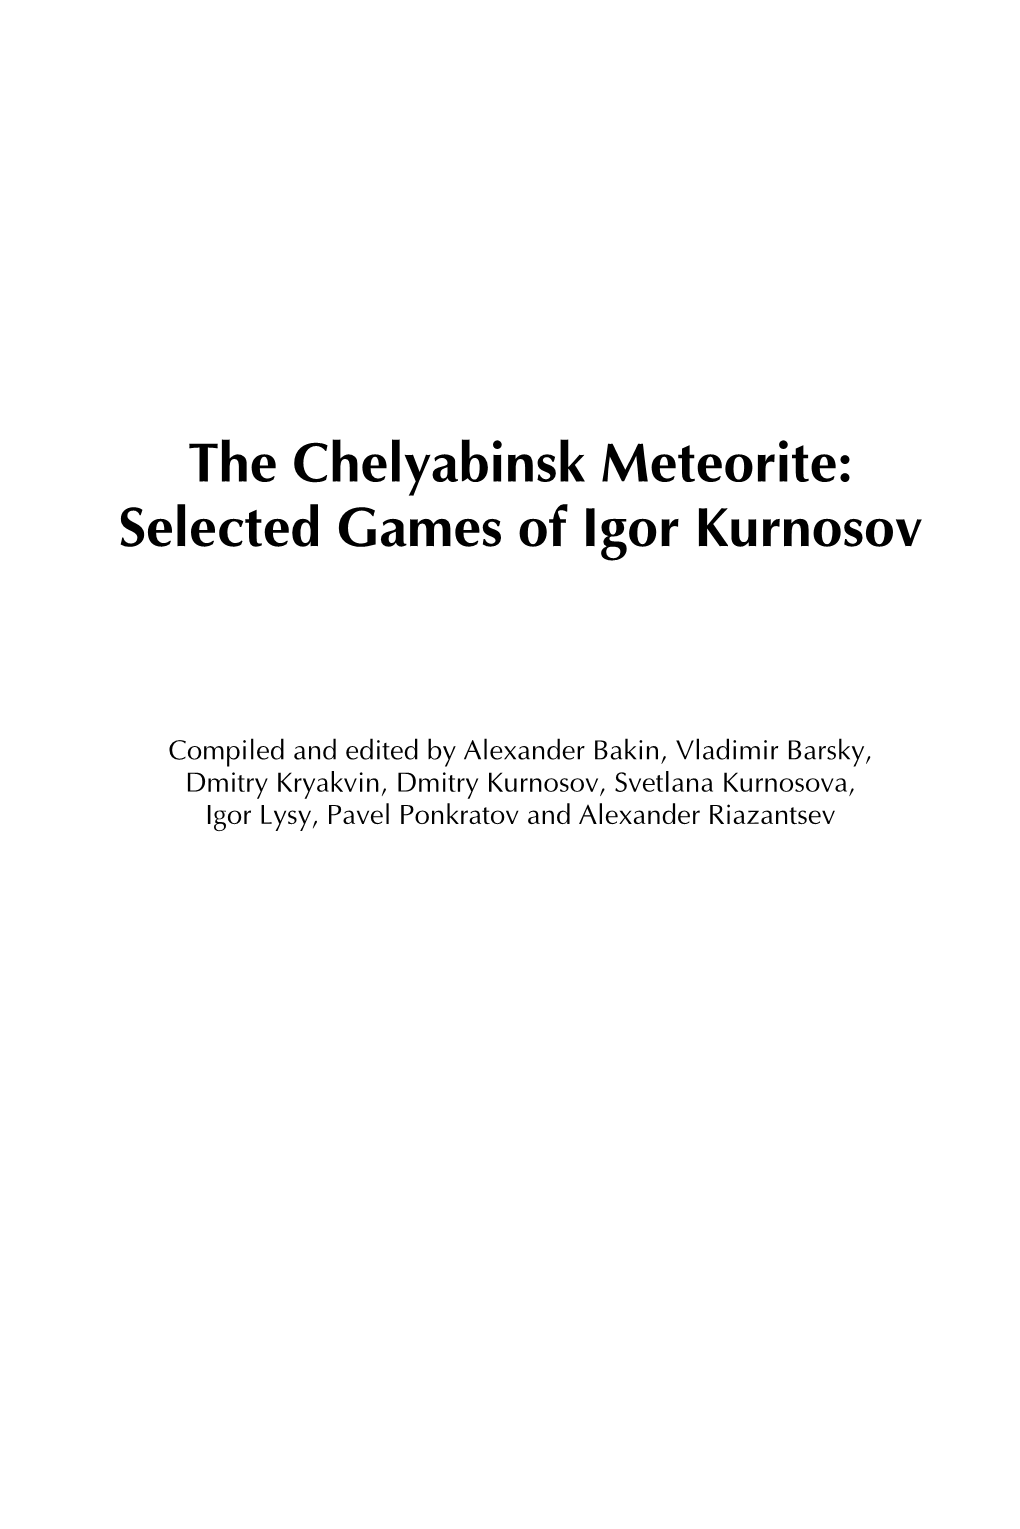 The Chelyabinsk Meteorite: Selected Games of Igor Kurnosov